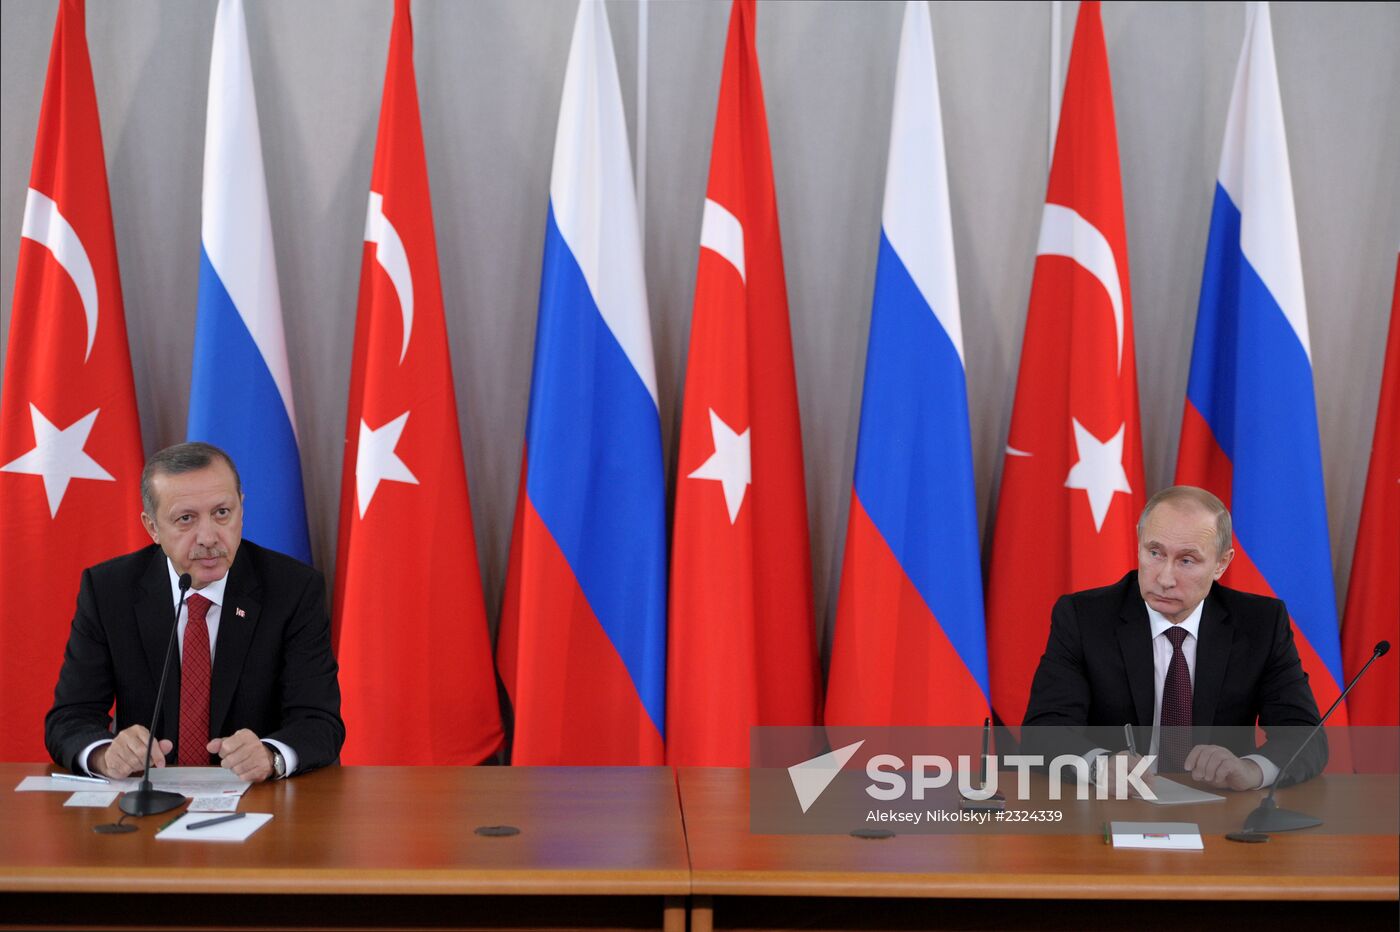 Vladimir Putin meets with Recep Tayyip Erdogan